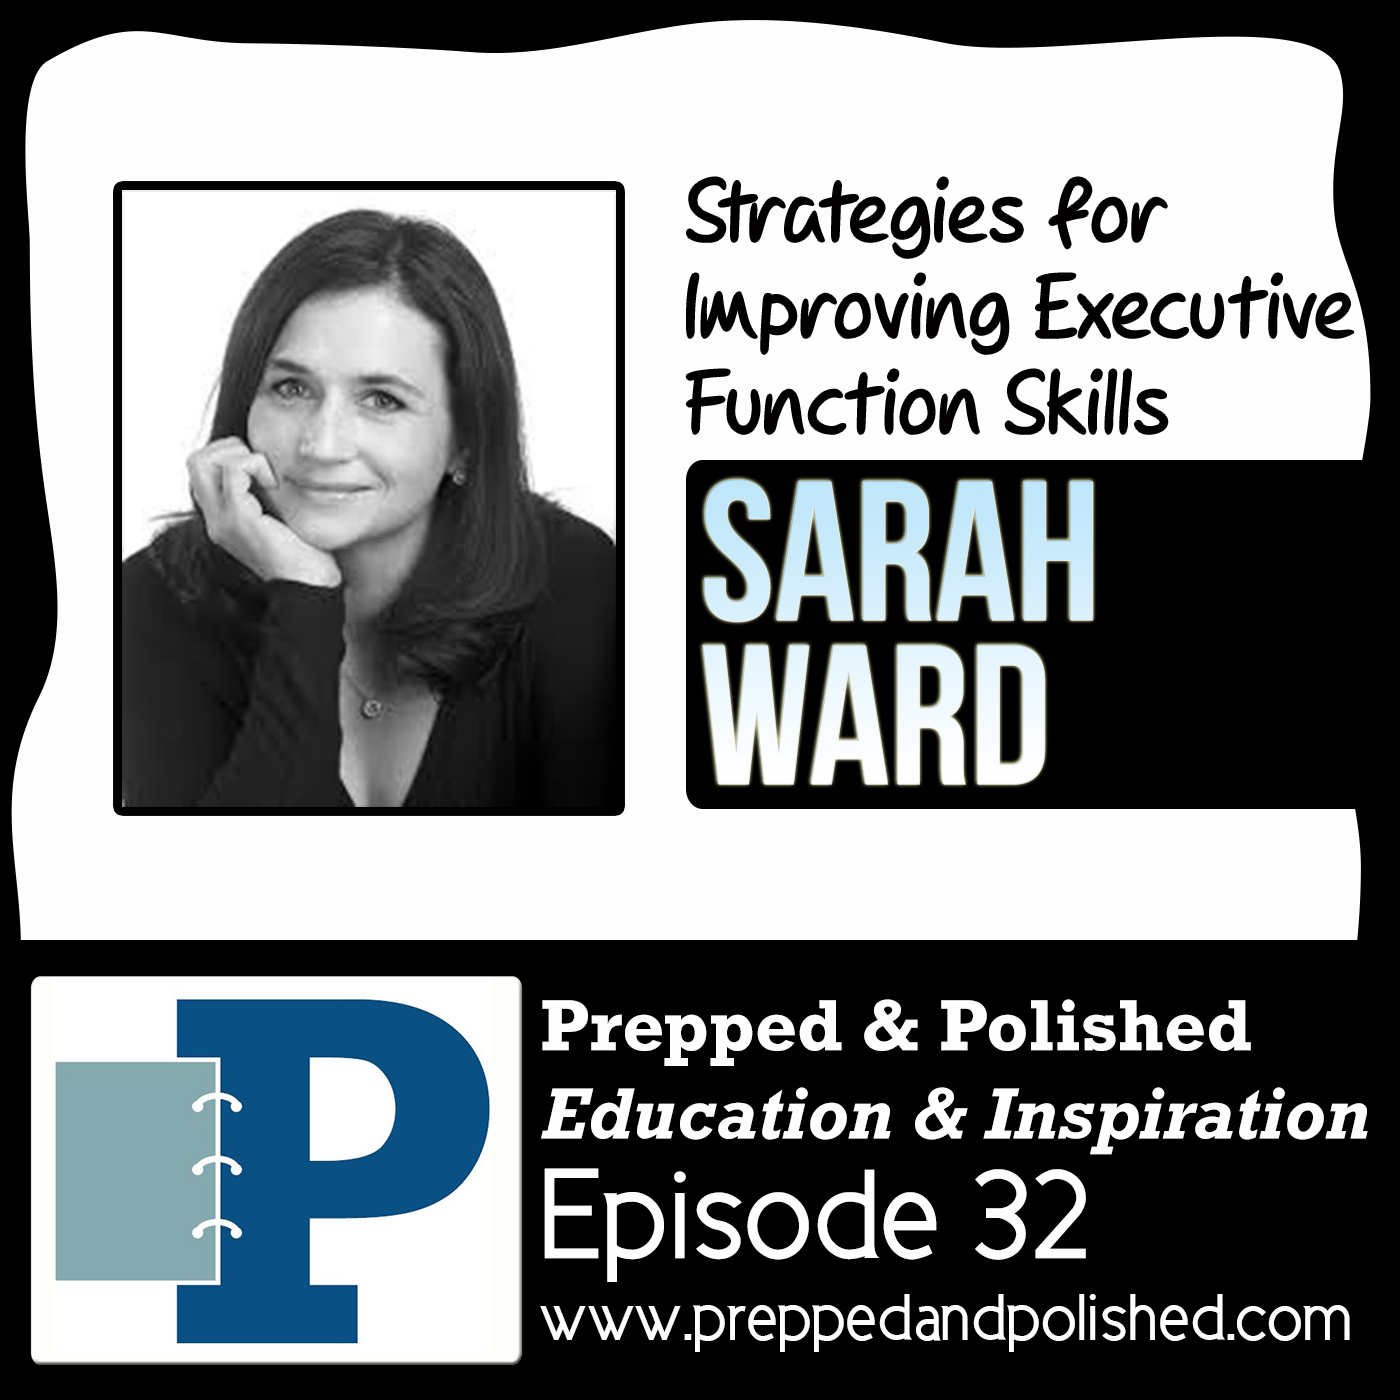 Sarah Ward, Strategies for Improving Executive Function Skills